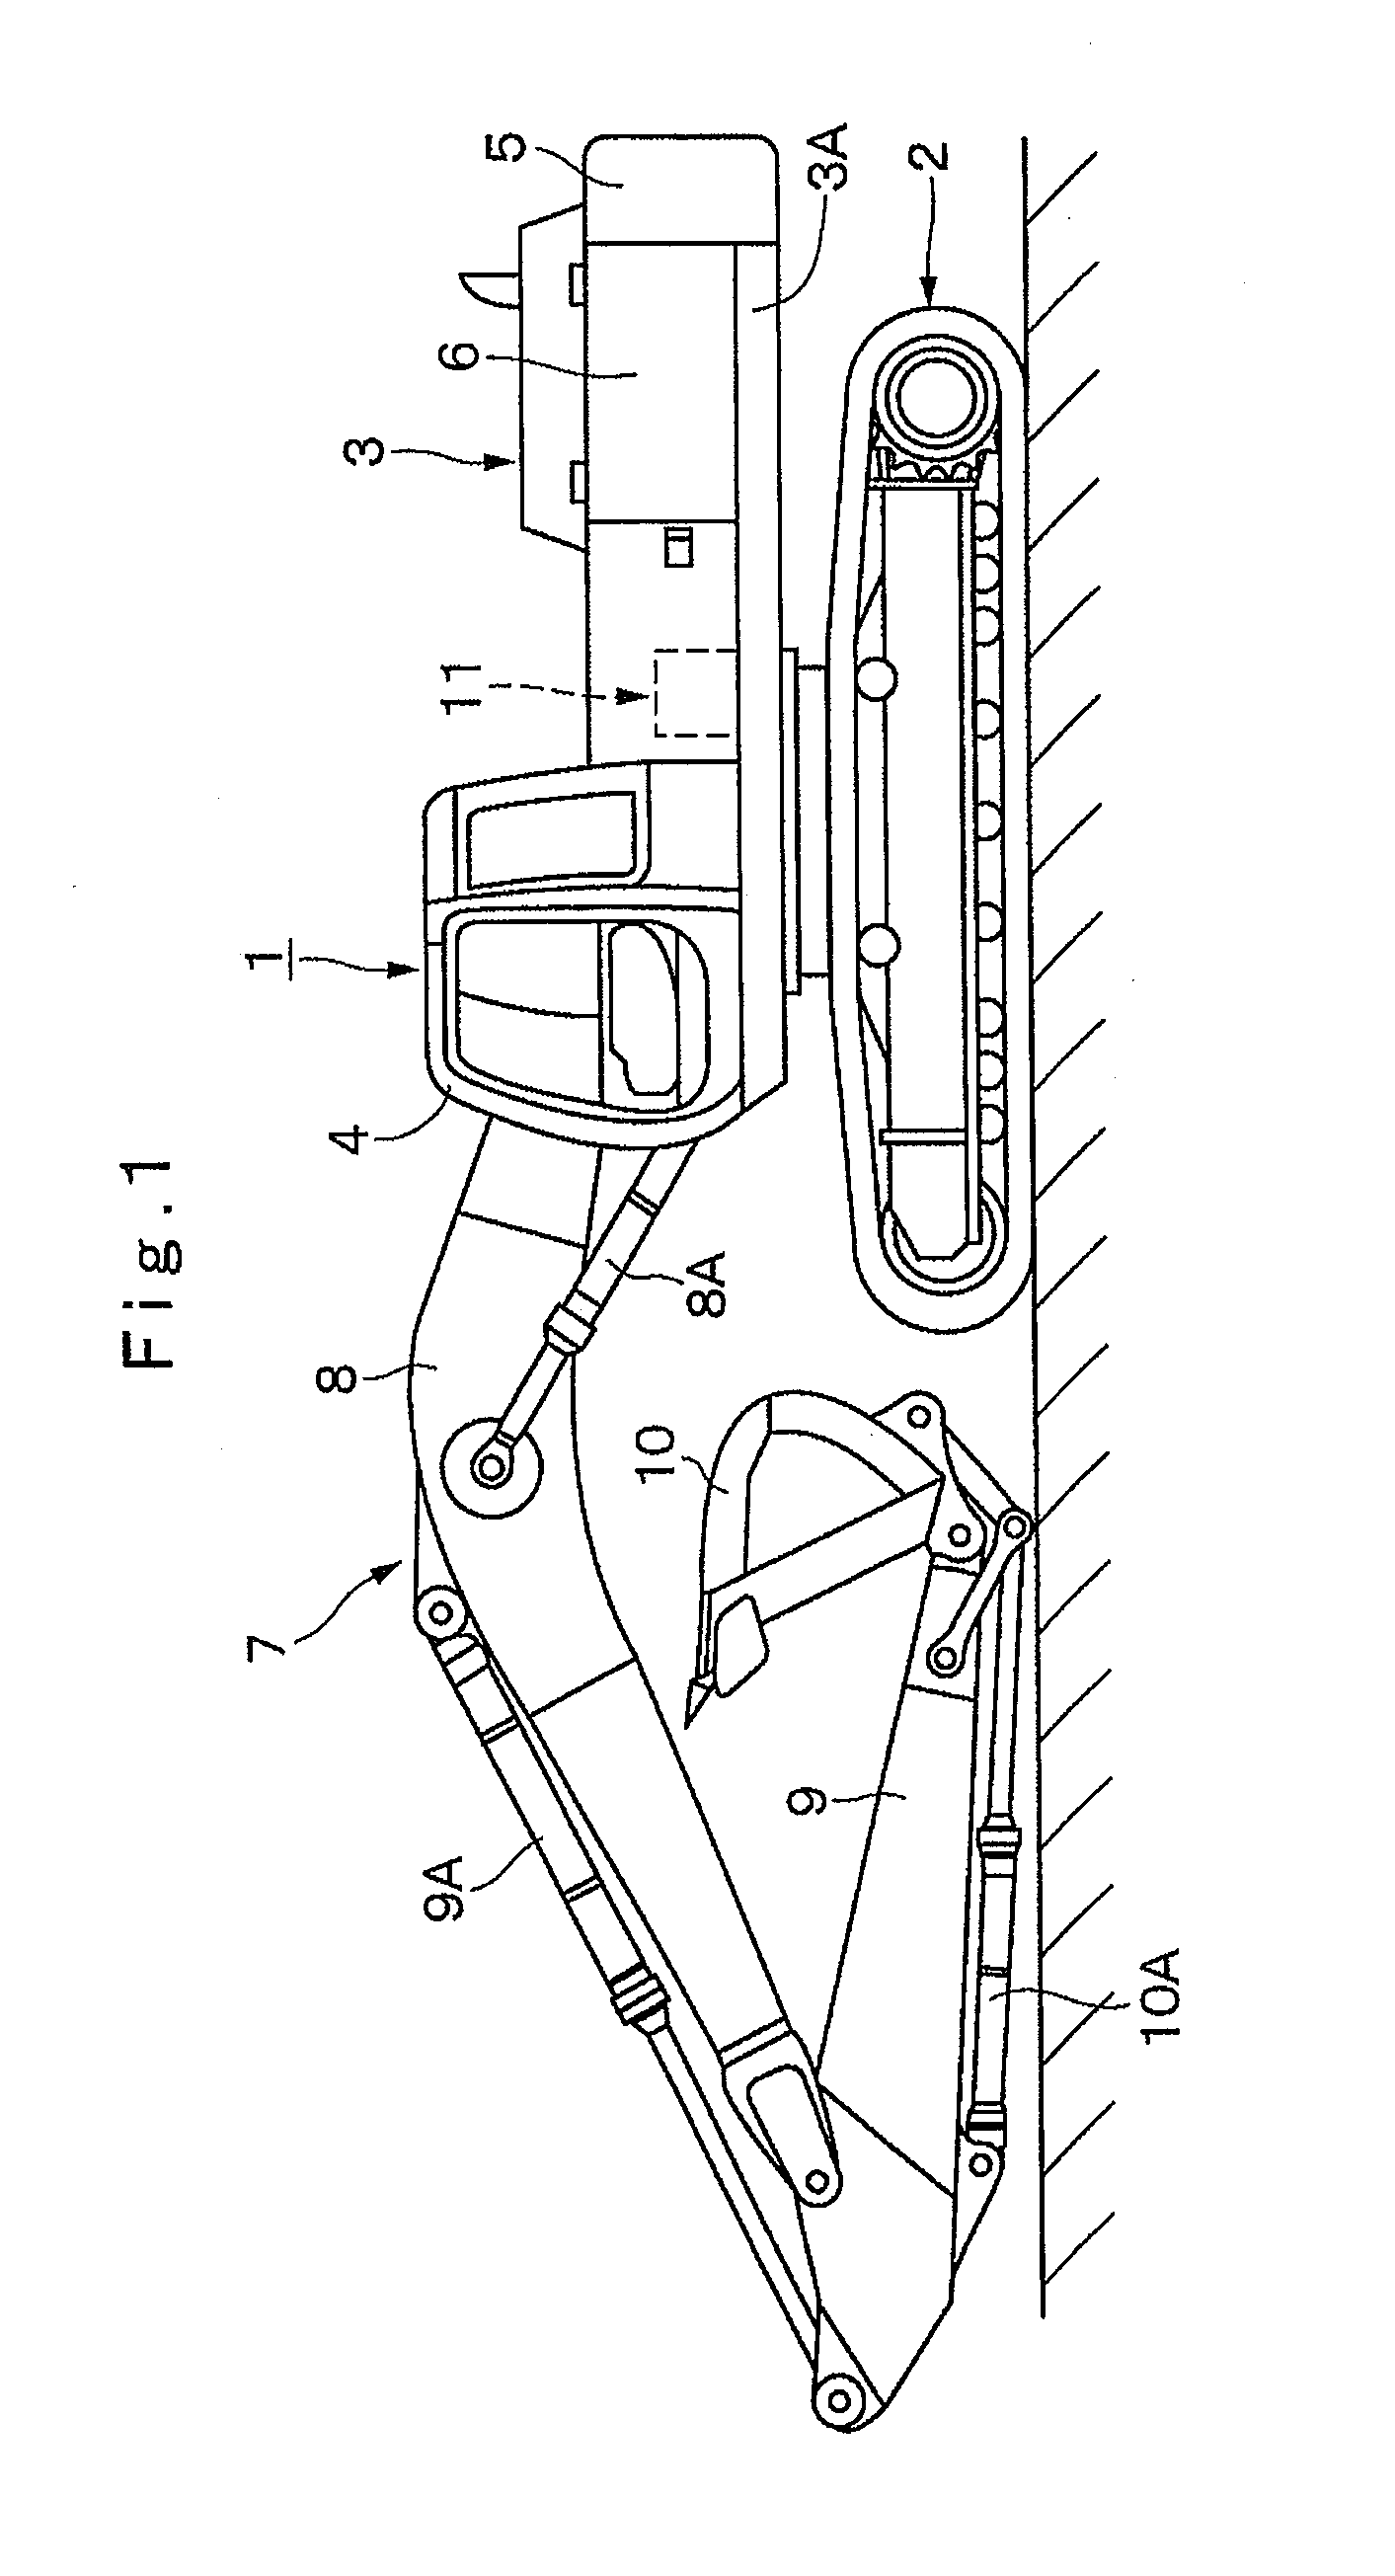 Multiple valve device